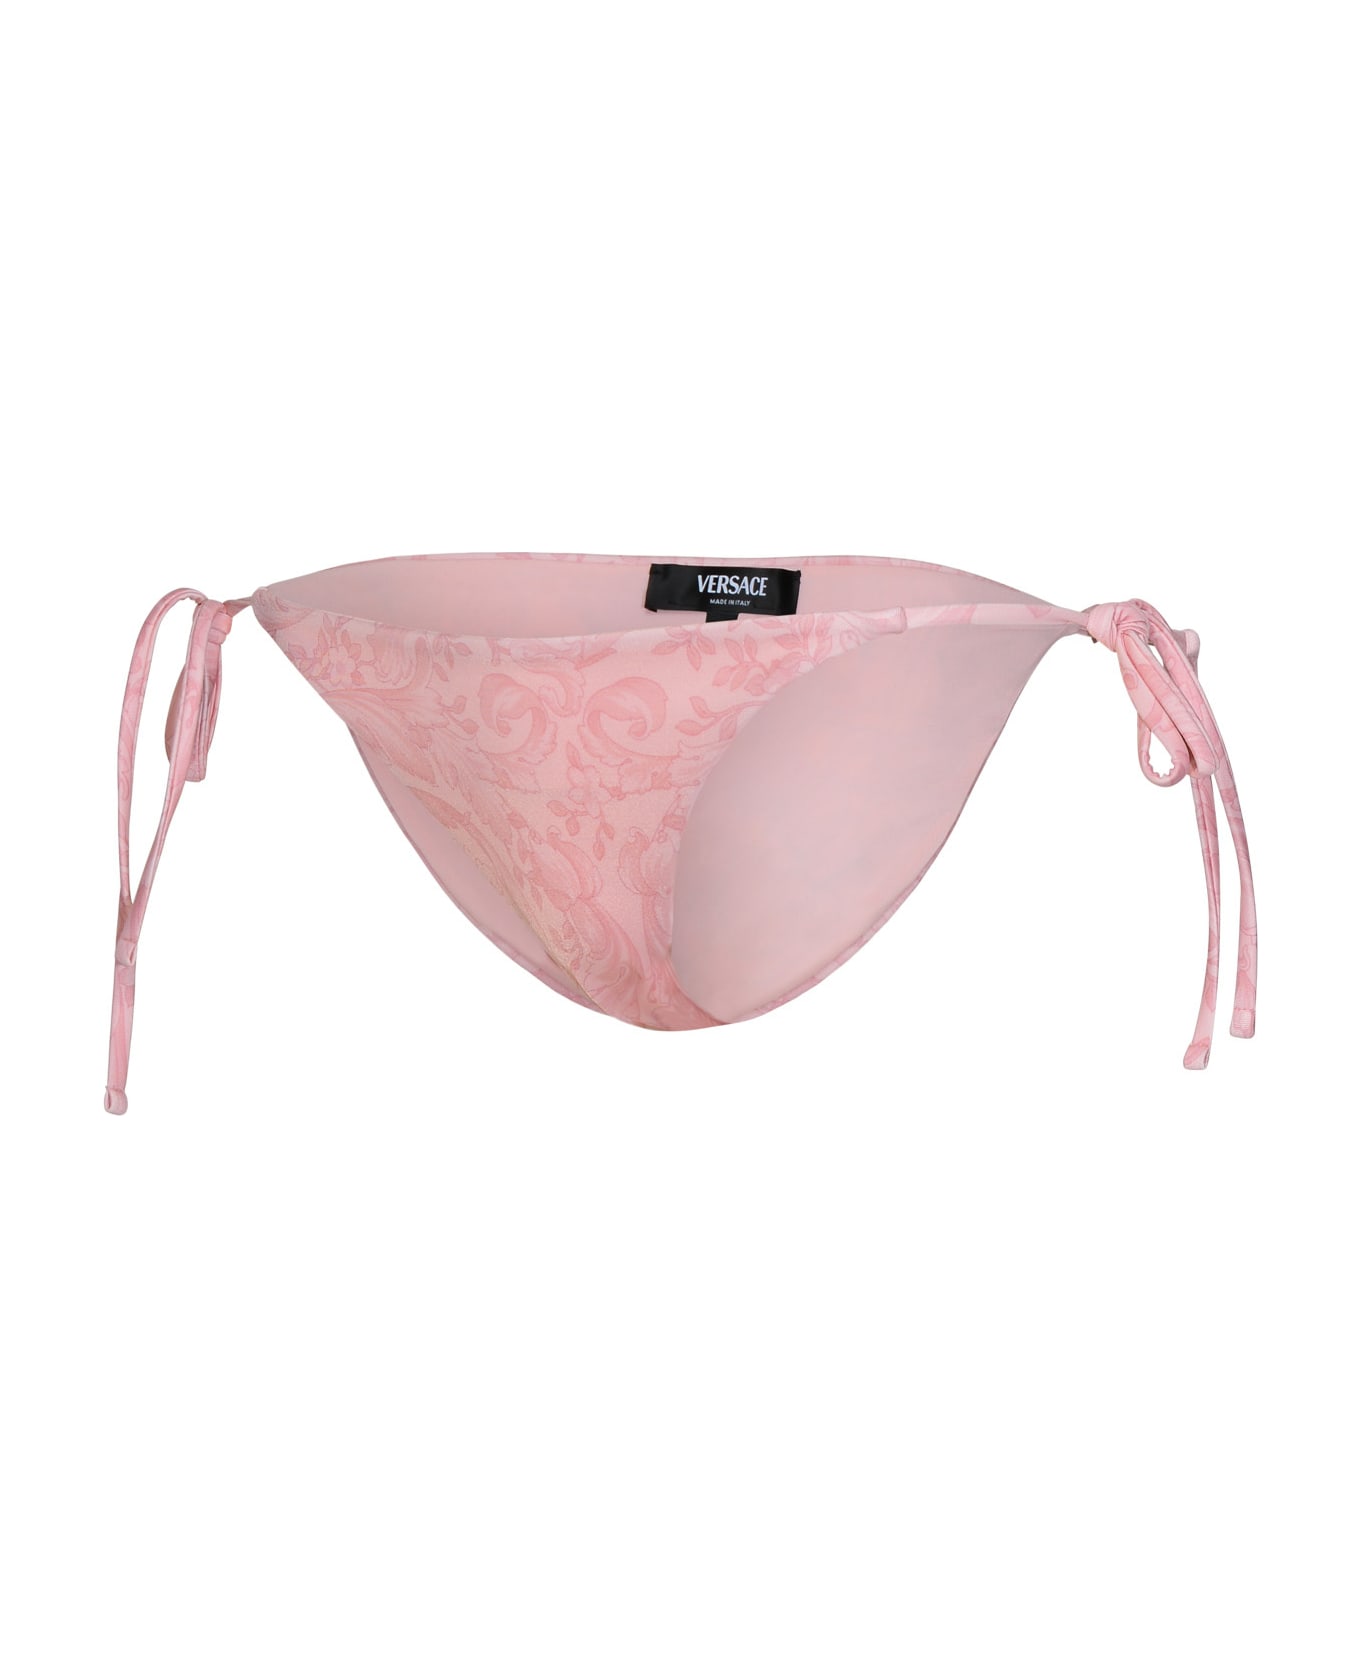 Versace 'barocco' Pink Polyester Blend Bikini Bottoms - Pink